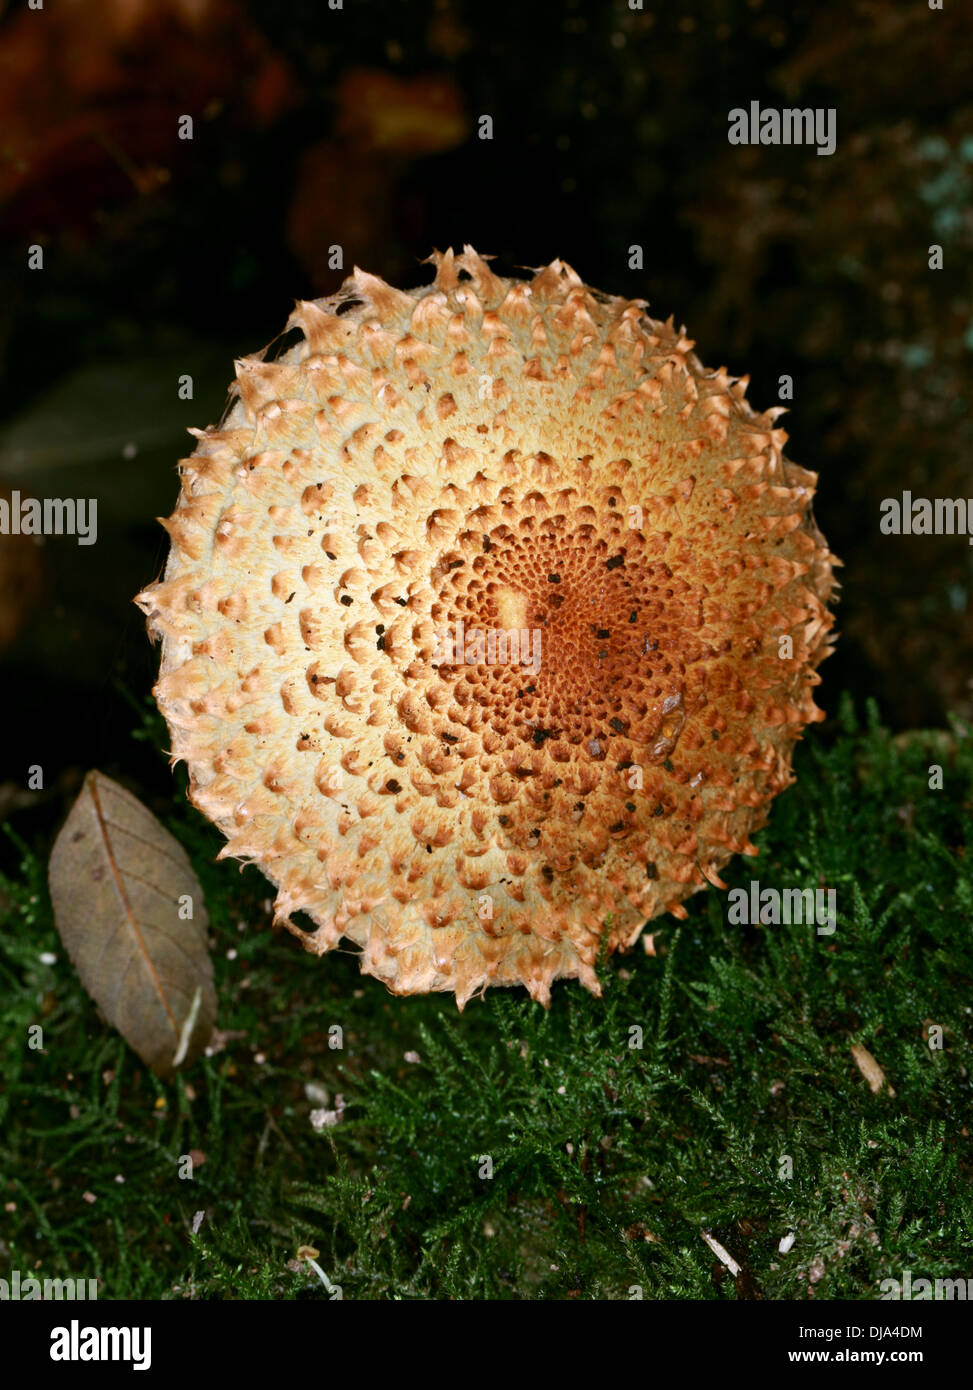 Shaggy Pholiota, Pholiota Squarrosa, Strophariaceae. Gemeinsamen Beechwood Fliegenpilz oder Pilz. Stockfoto